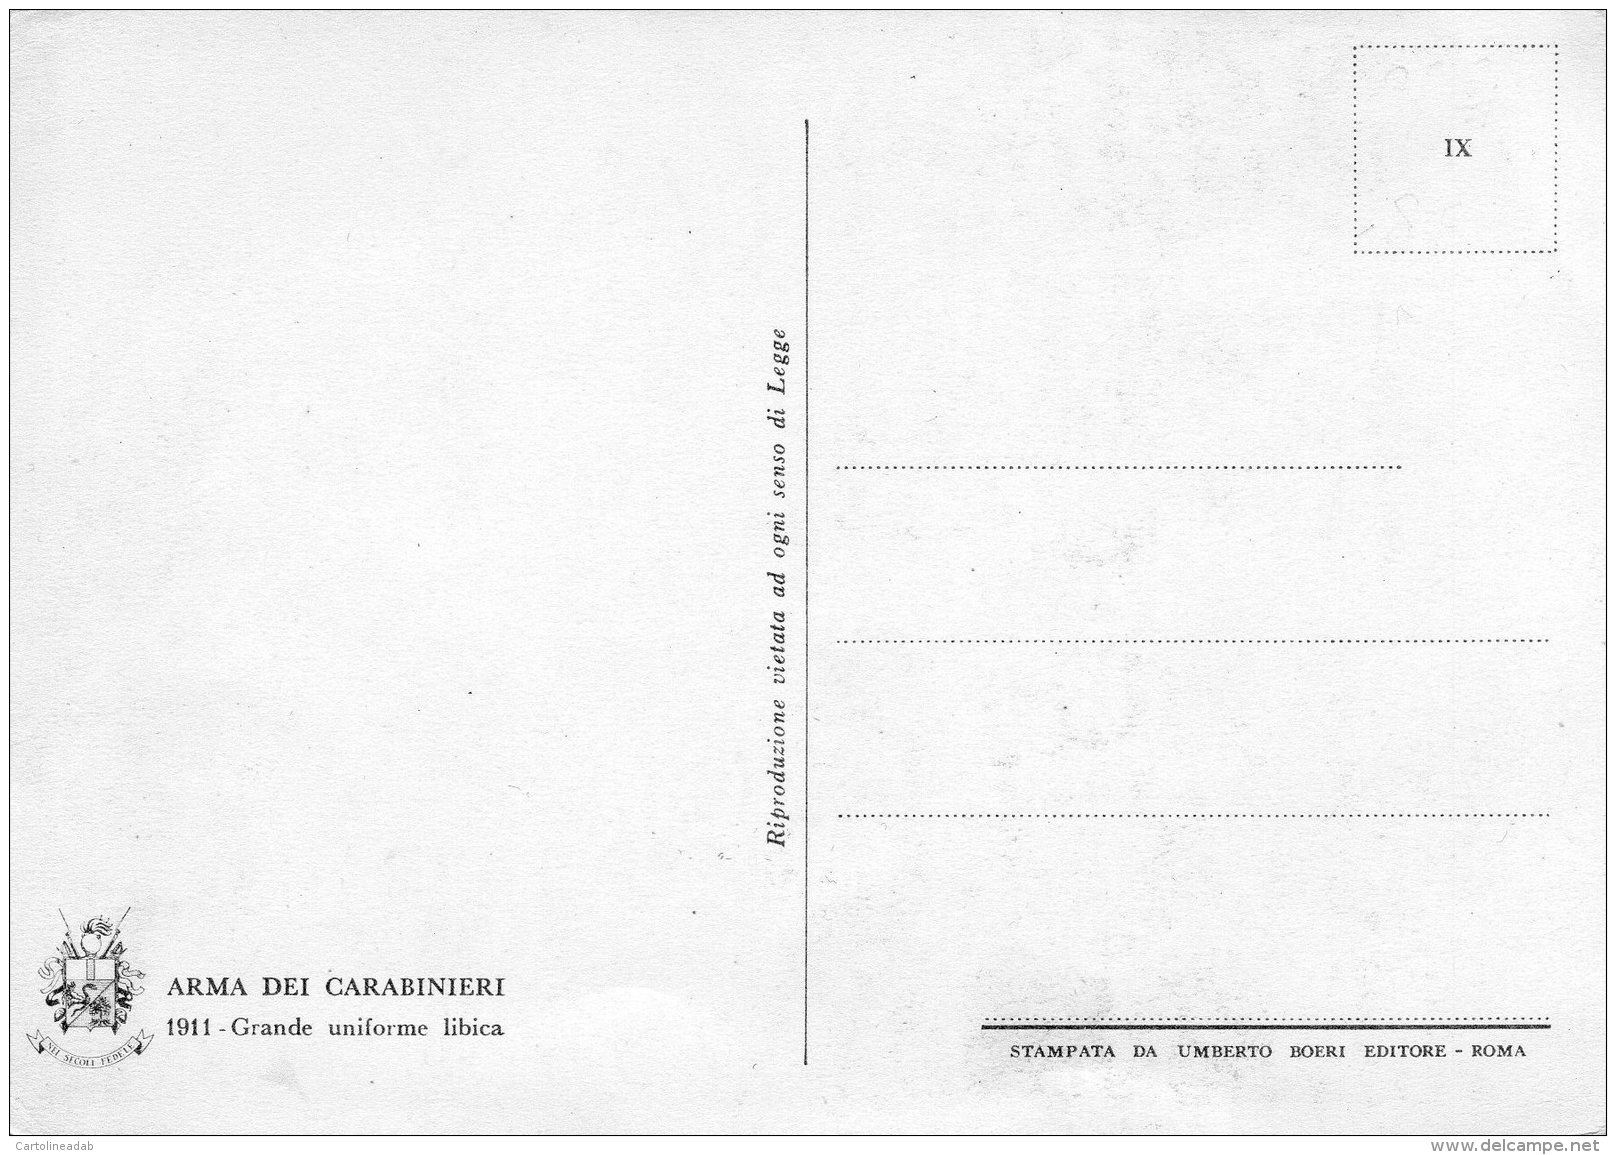 [DC9662] CPA - ARMA DEI CARABINIERI - GRANDE UNIFORME LIBICA 1911 - Non Viaggiata - Old Postcard - Uniformi